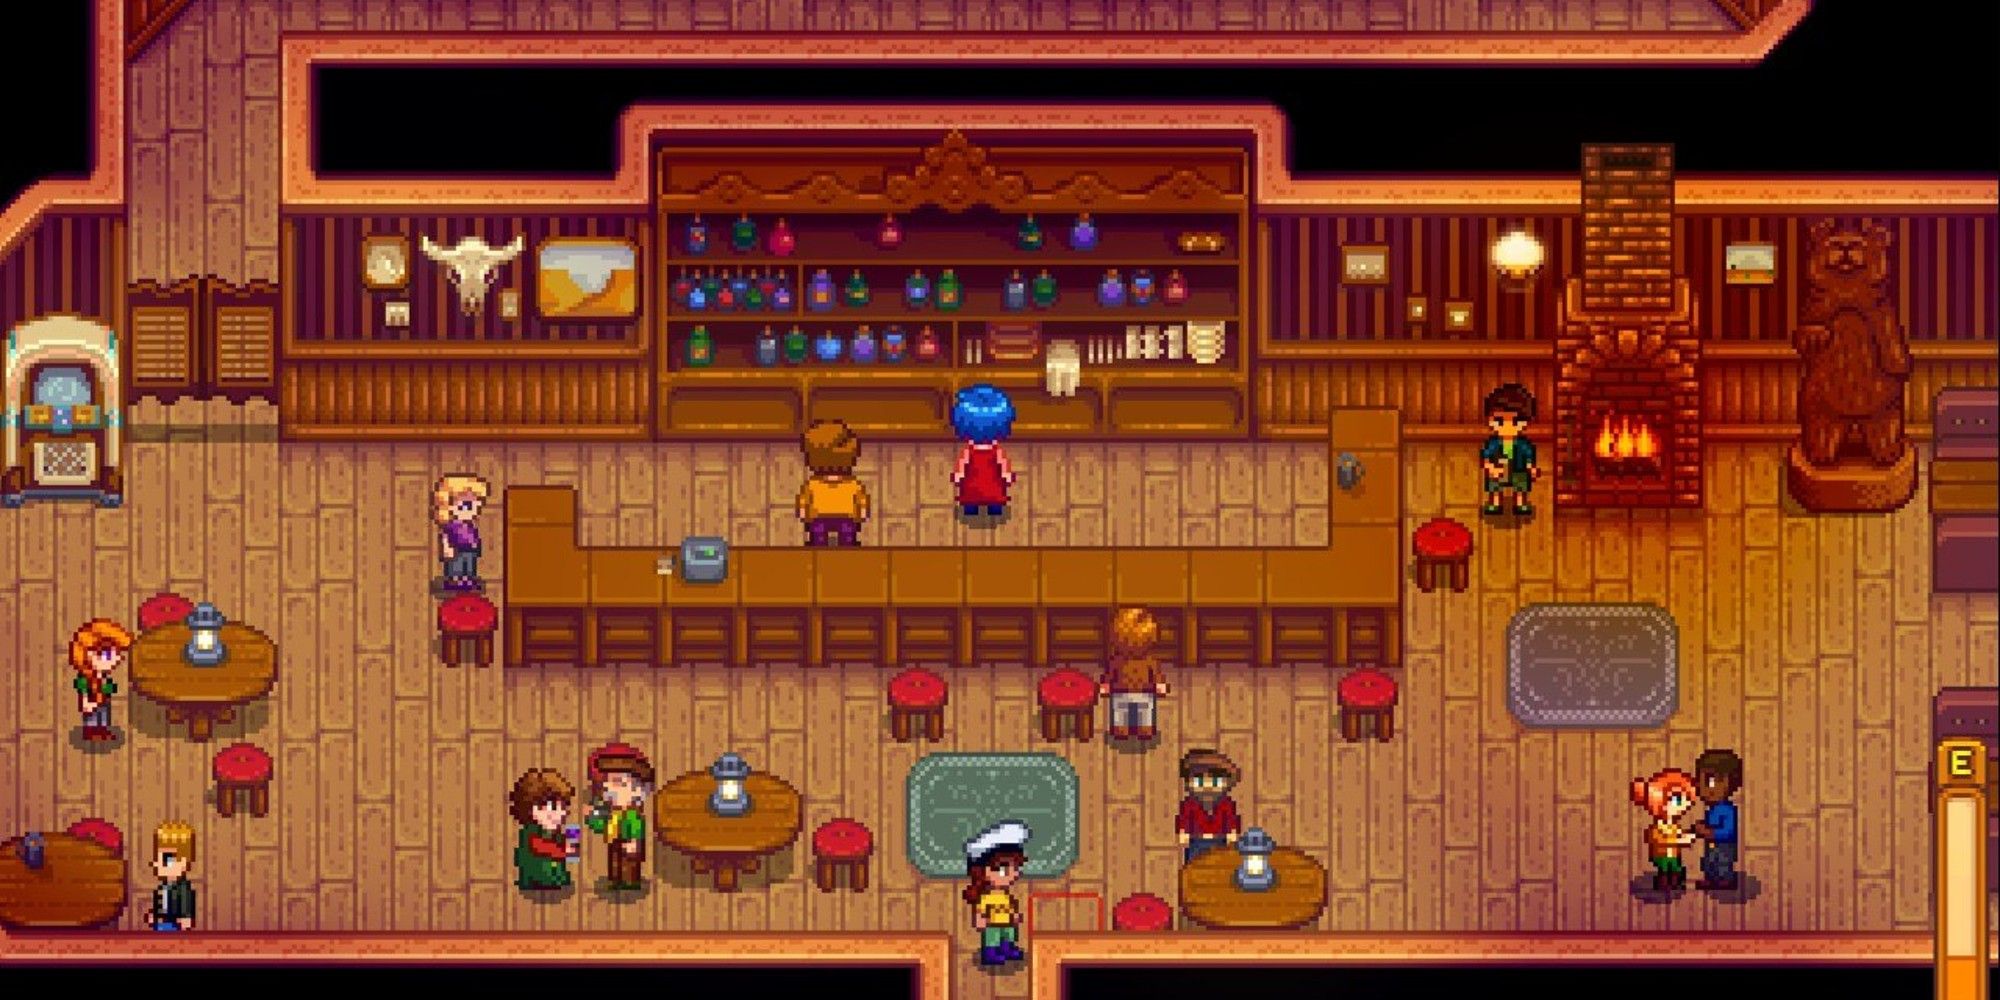 player inside saloon, full of NPCs